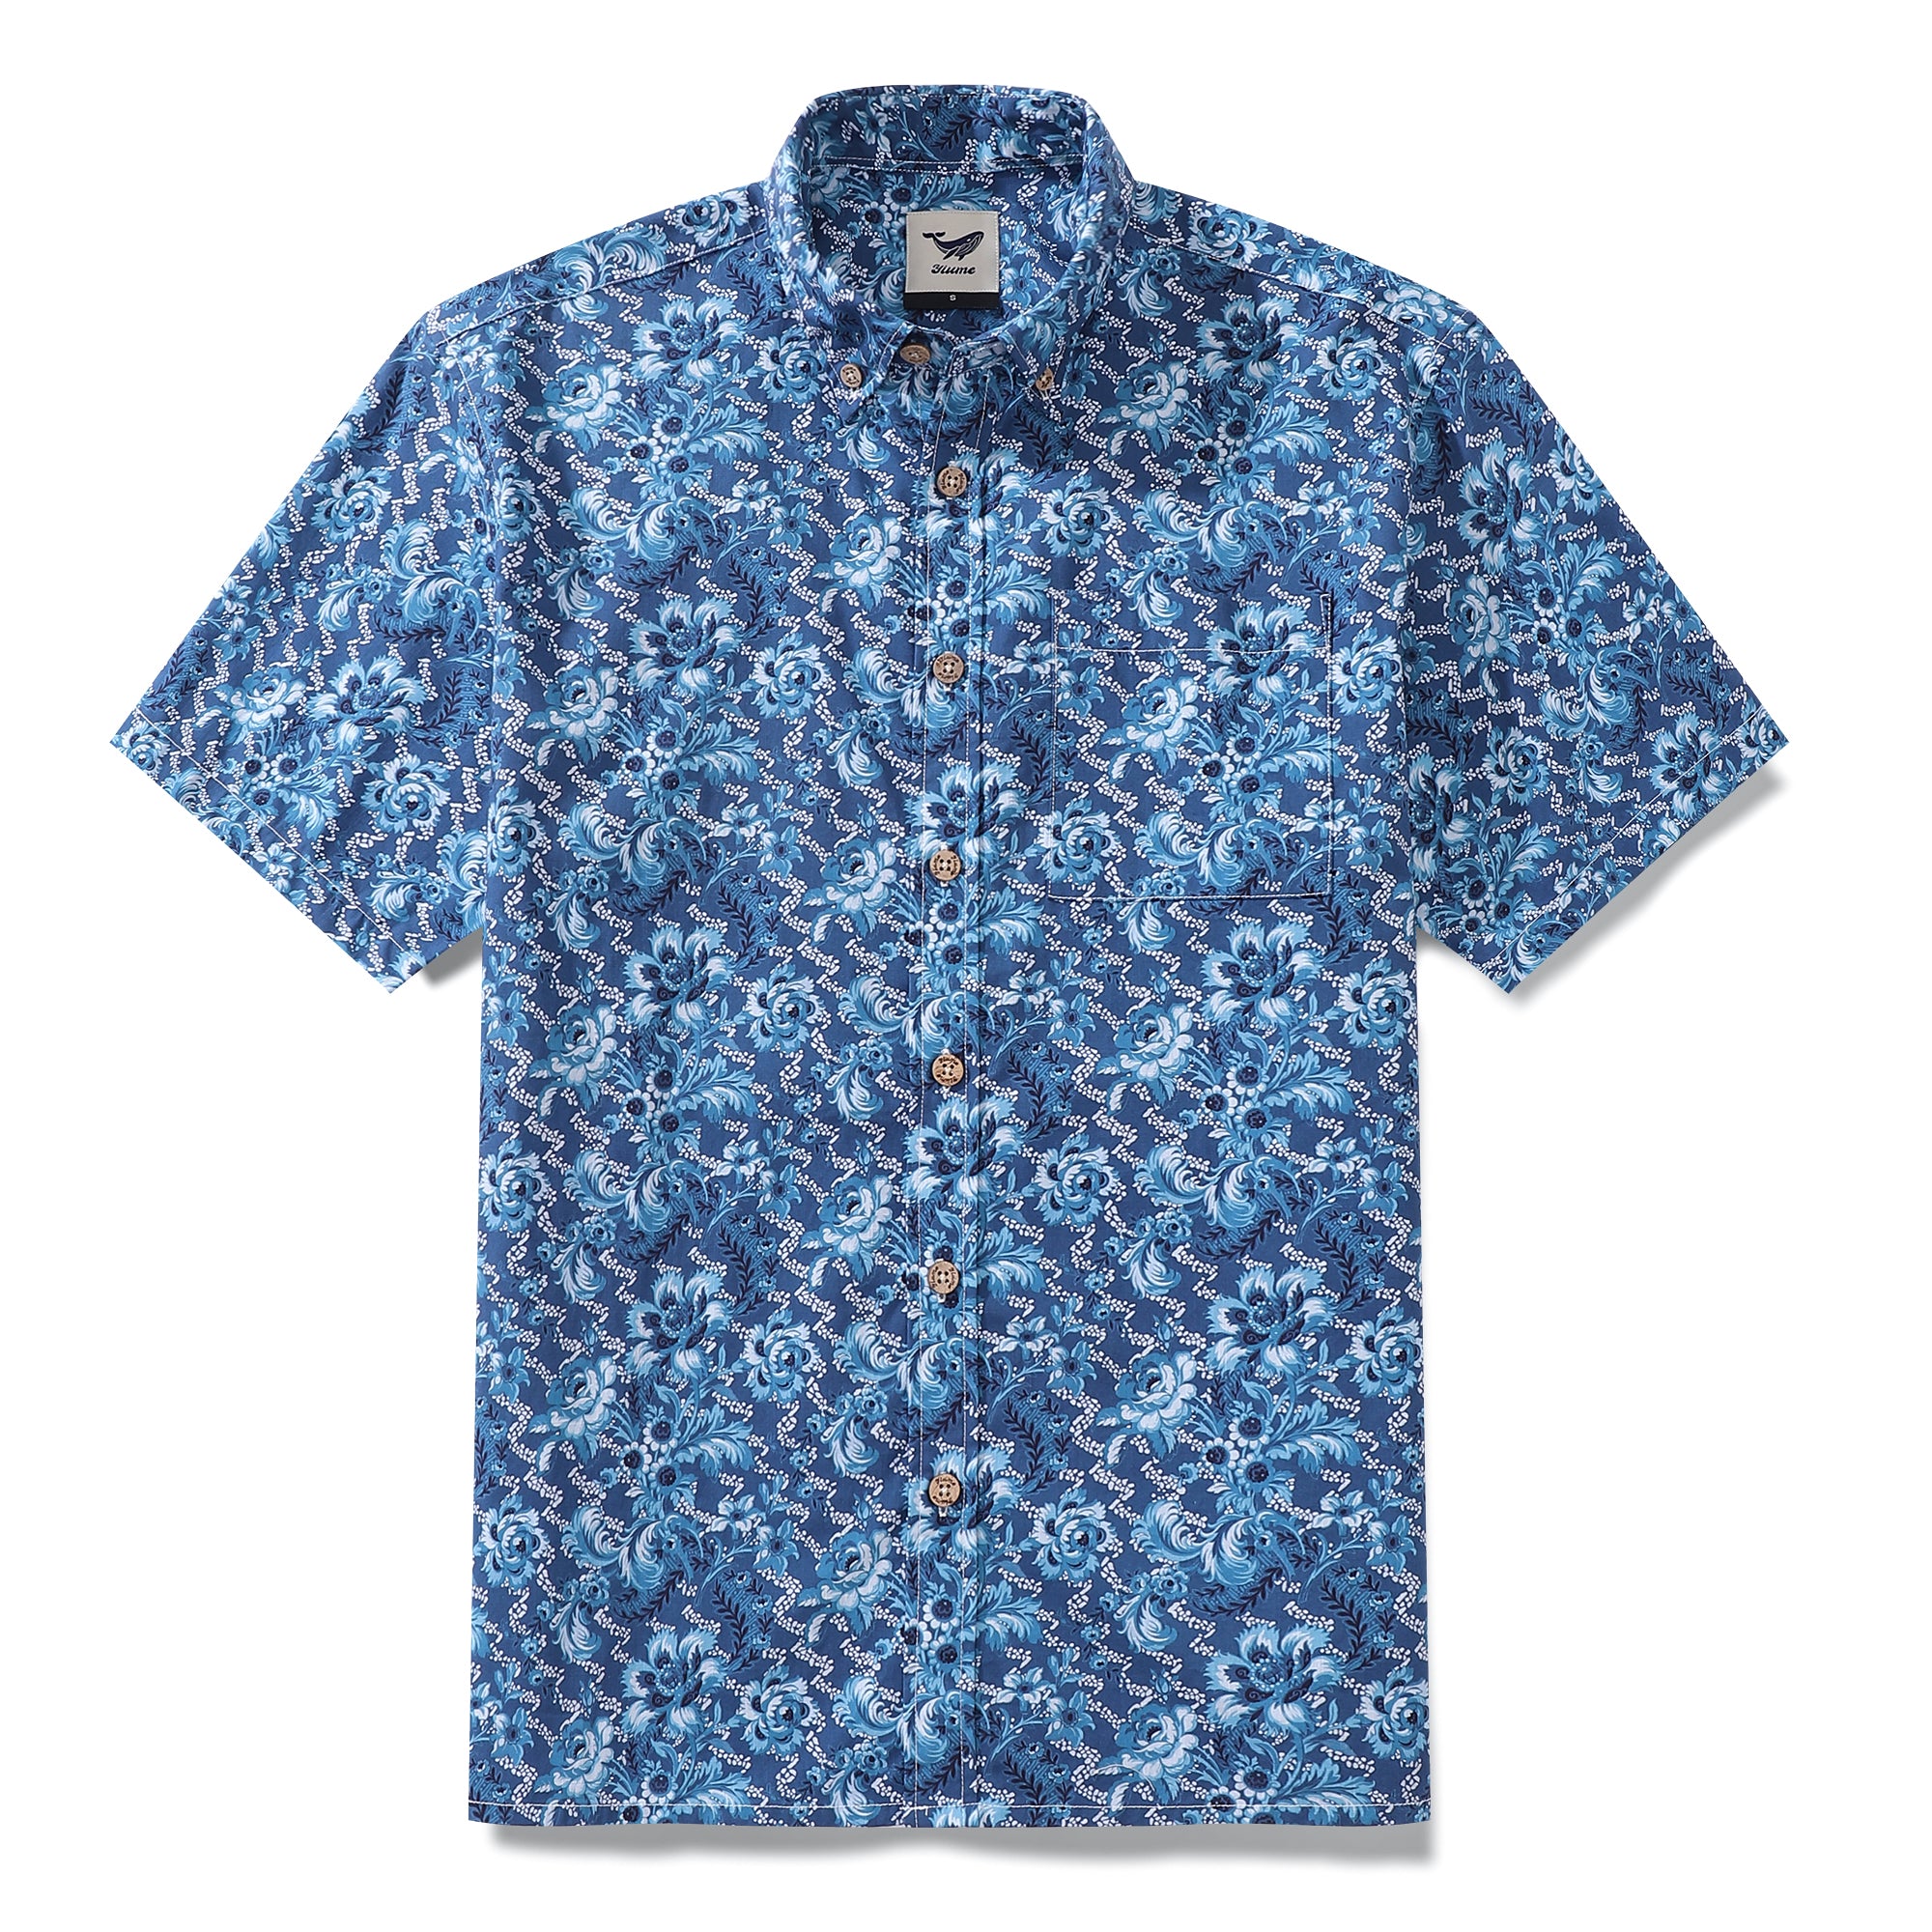 Men's Hawaiian Shirt Azure Blossoms Print Cotton Button-down Short Sle ...